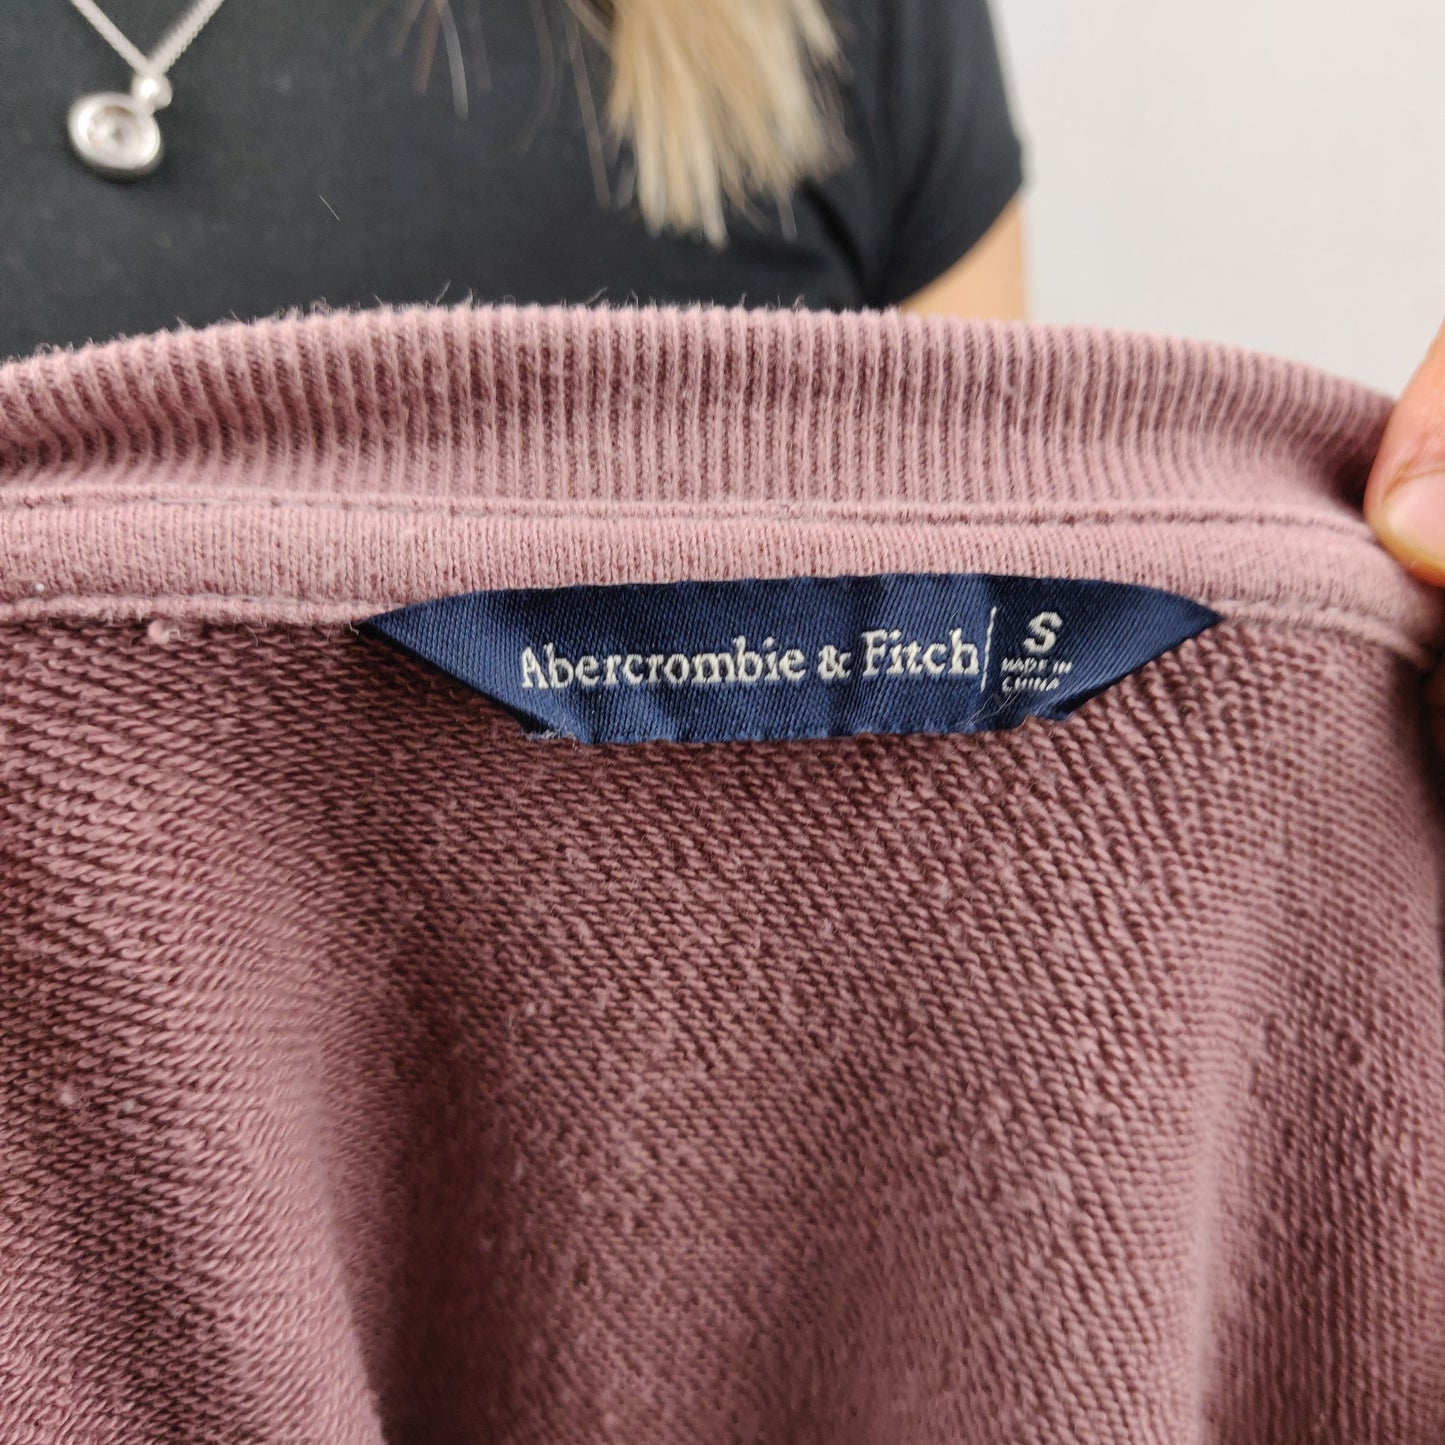 Abercrombie & Fitch Burgundy Crew Neck Pullover Sweatshirt Women Size Small